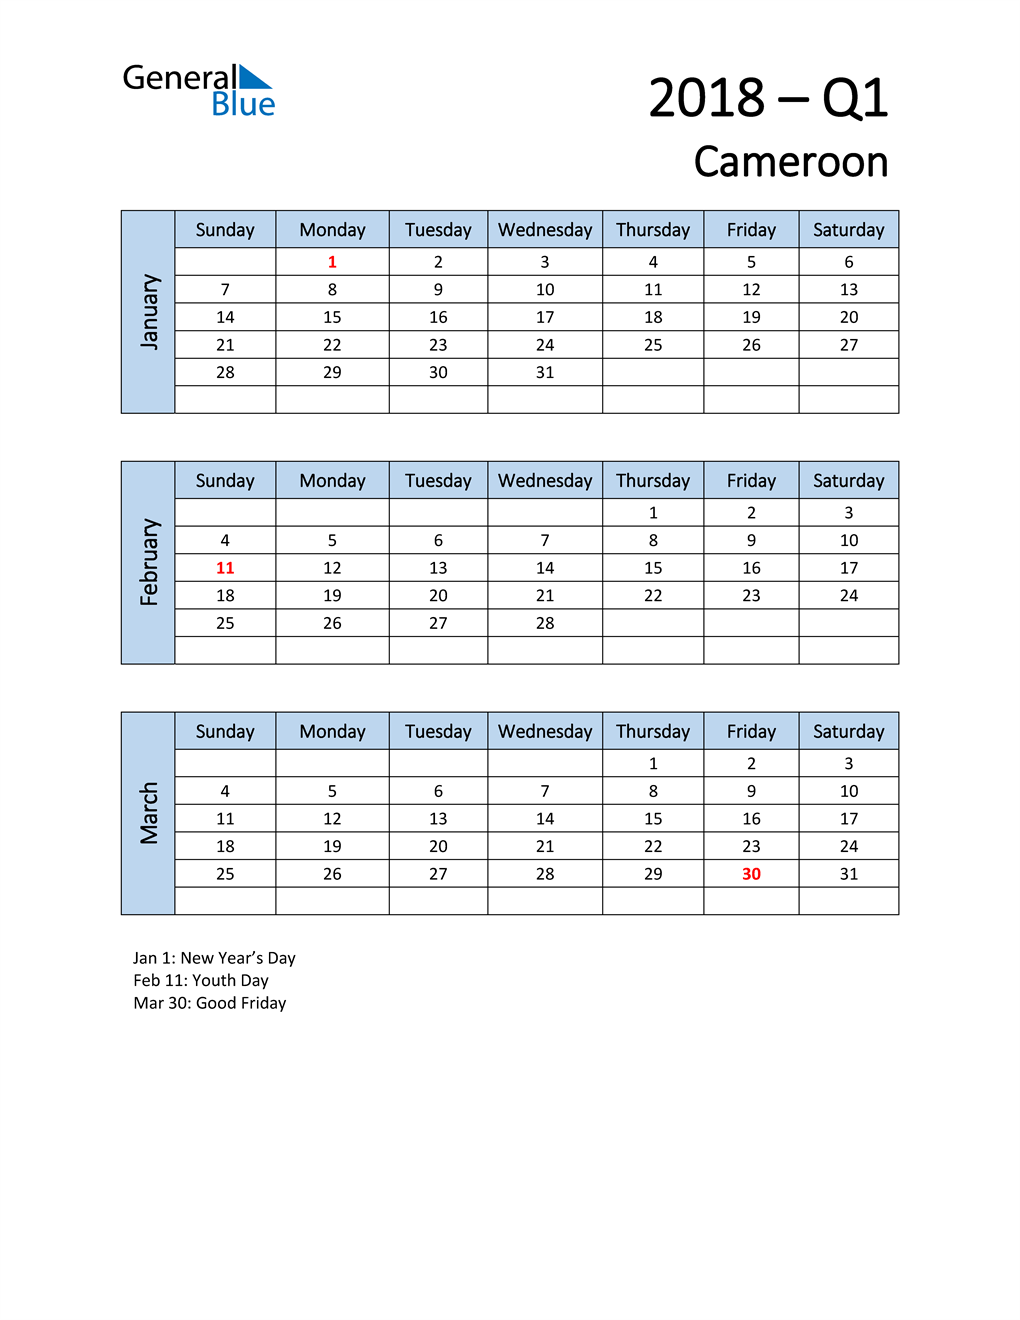  Free Q1 2018 Calendar for Cameroon